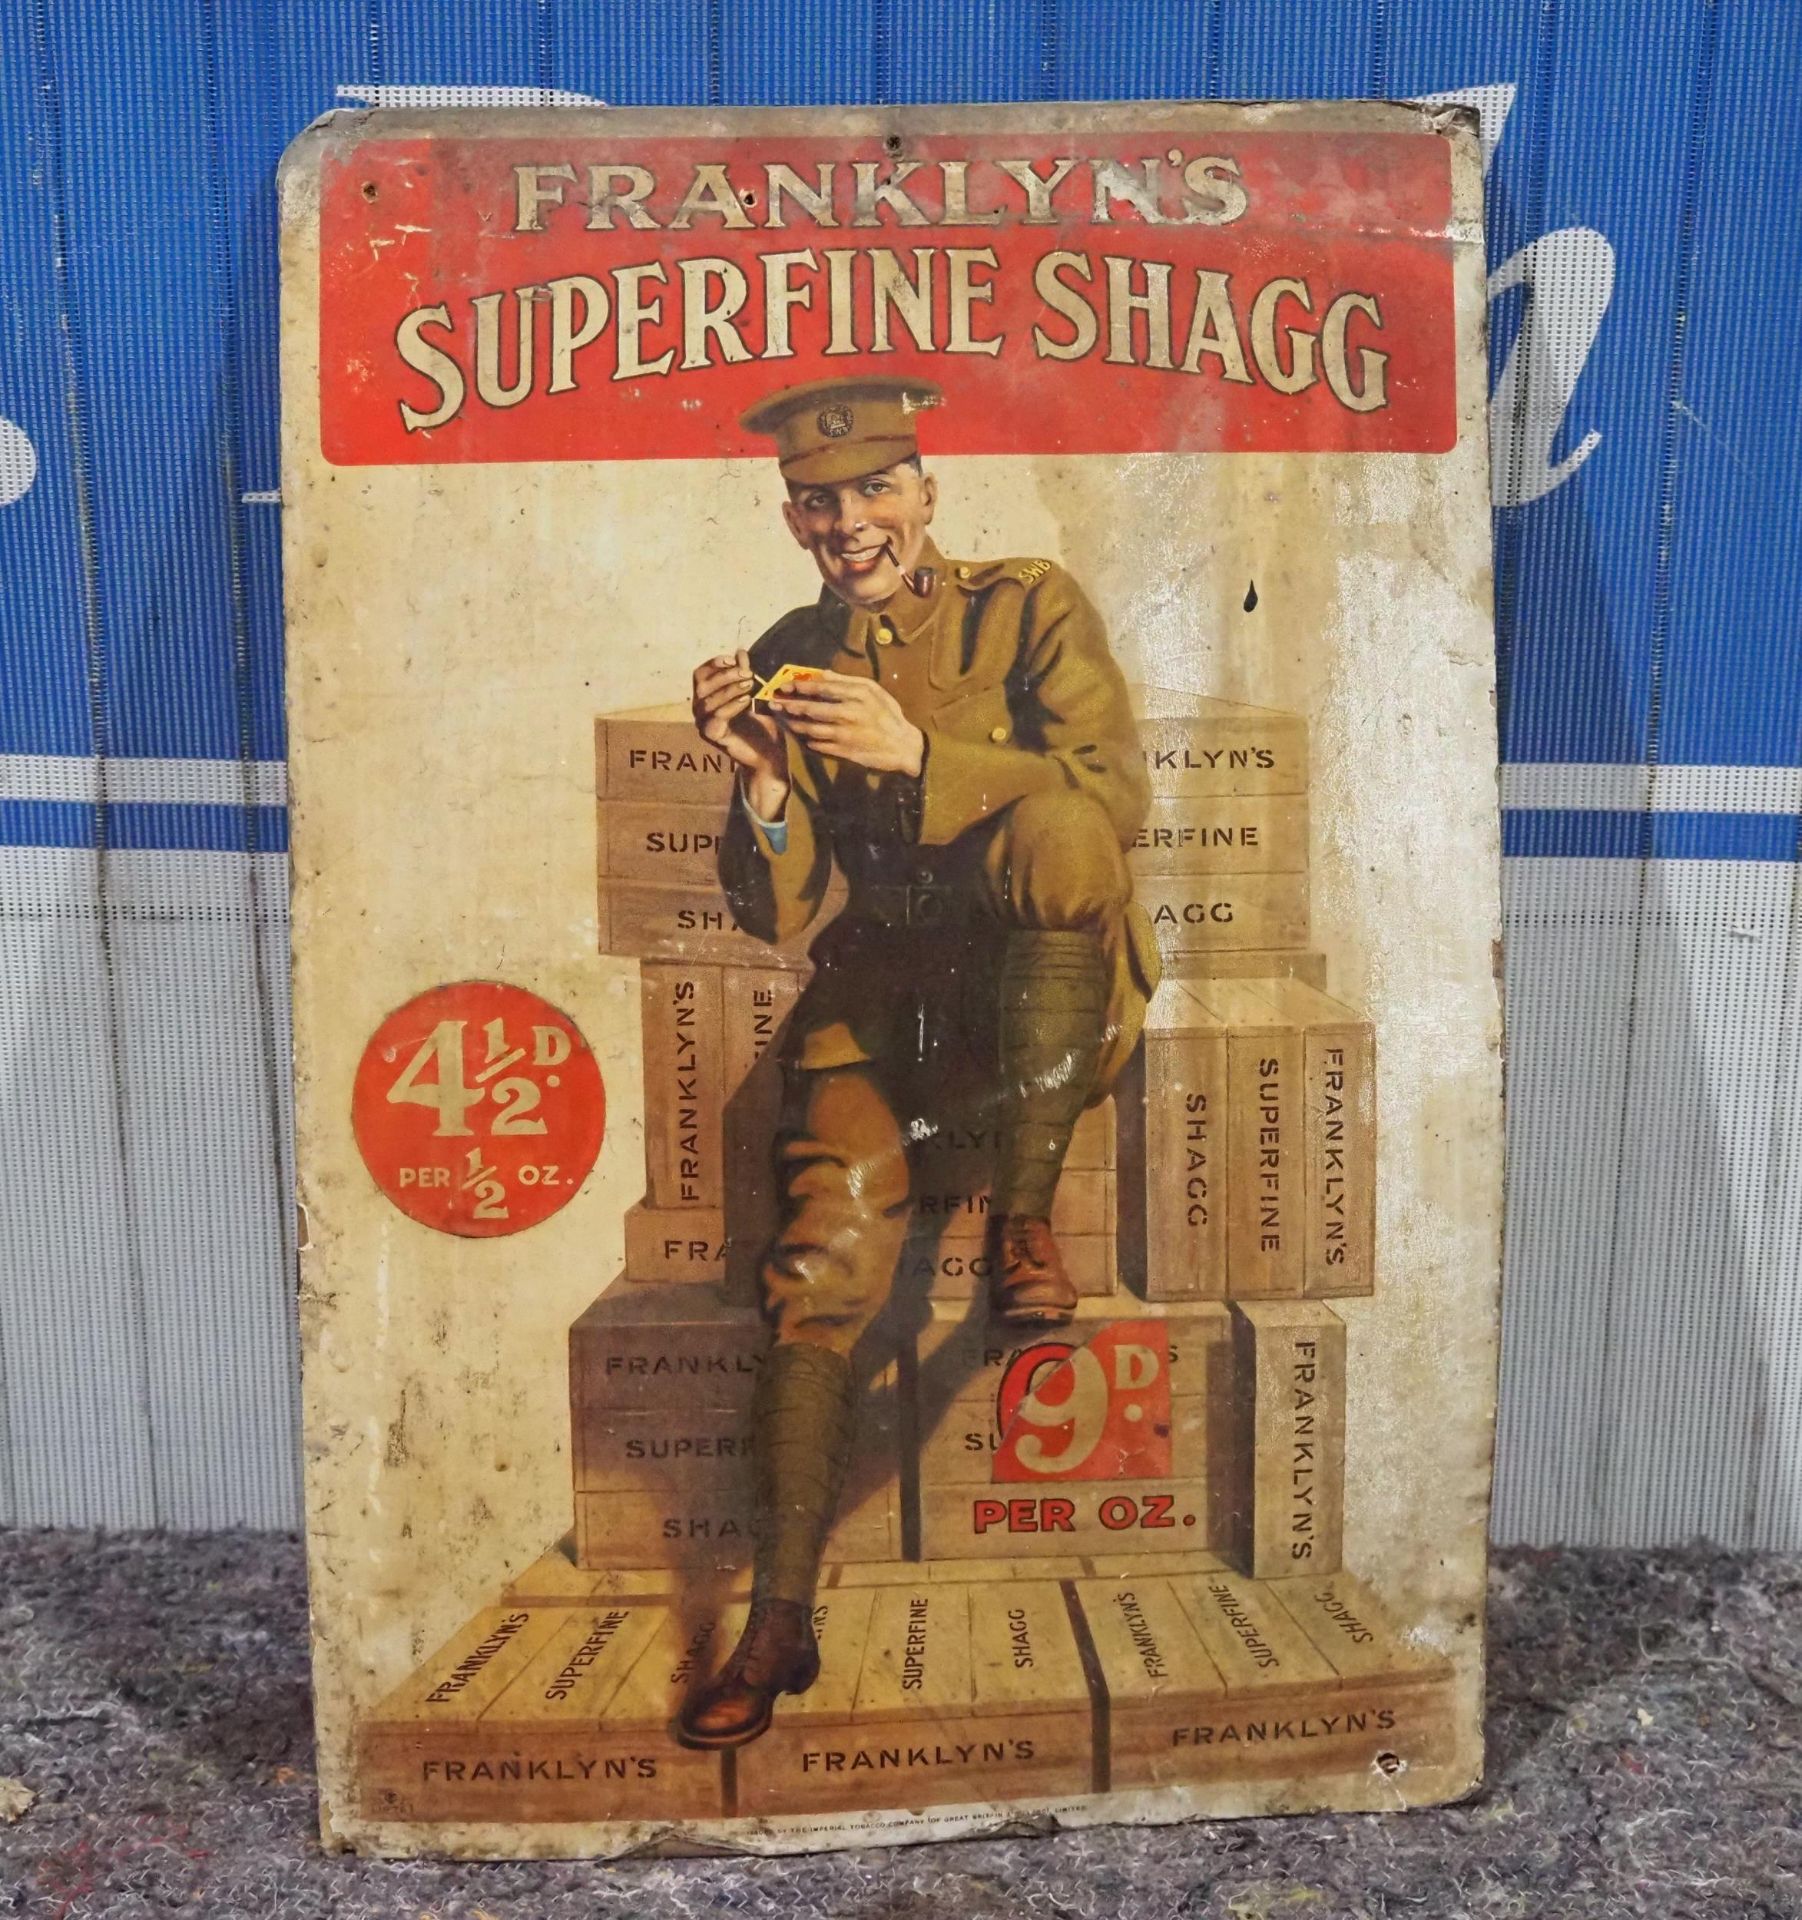 Franklin's Superfine Shag advertising showcard